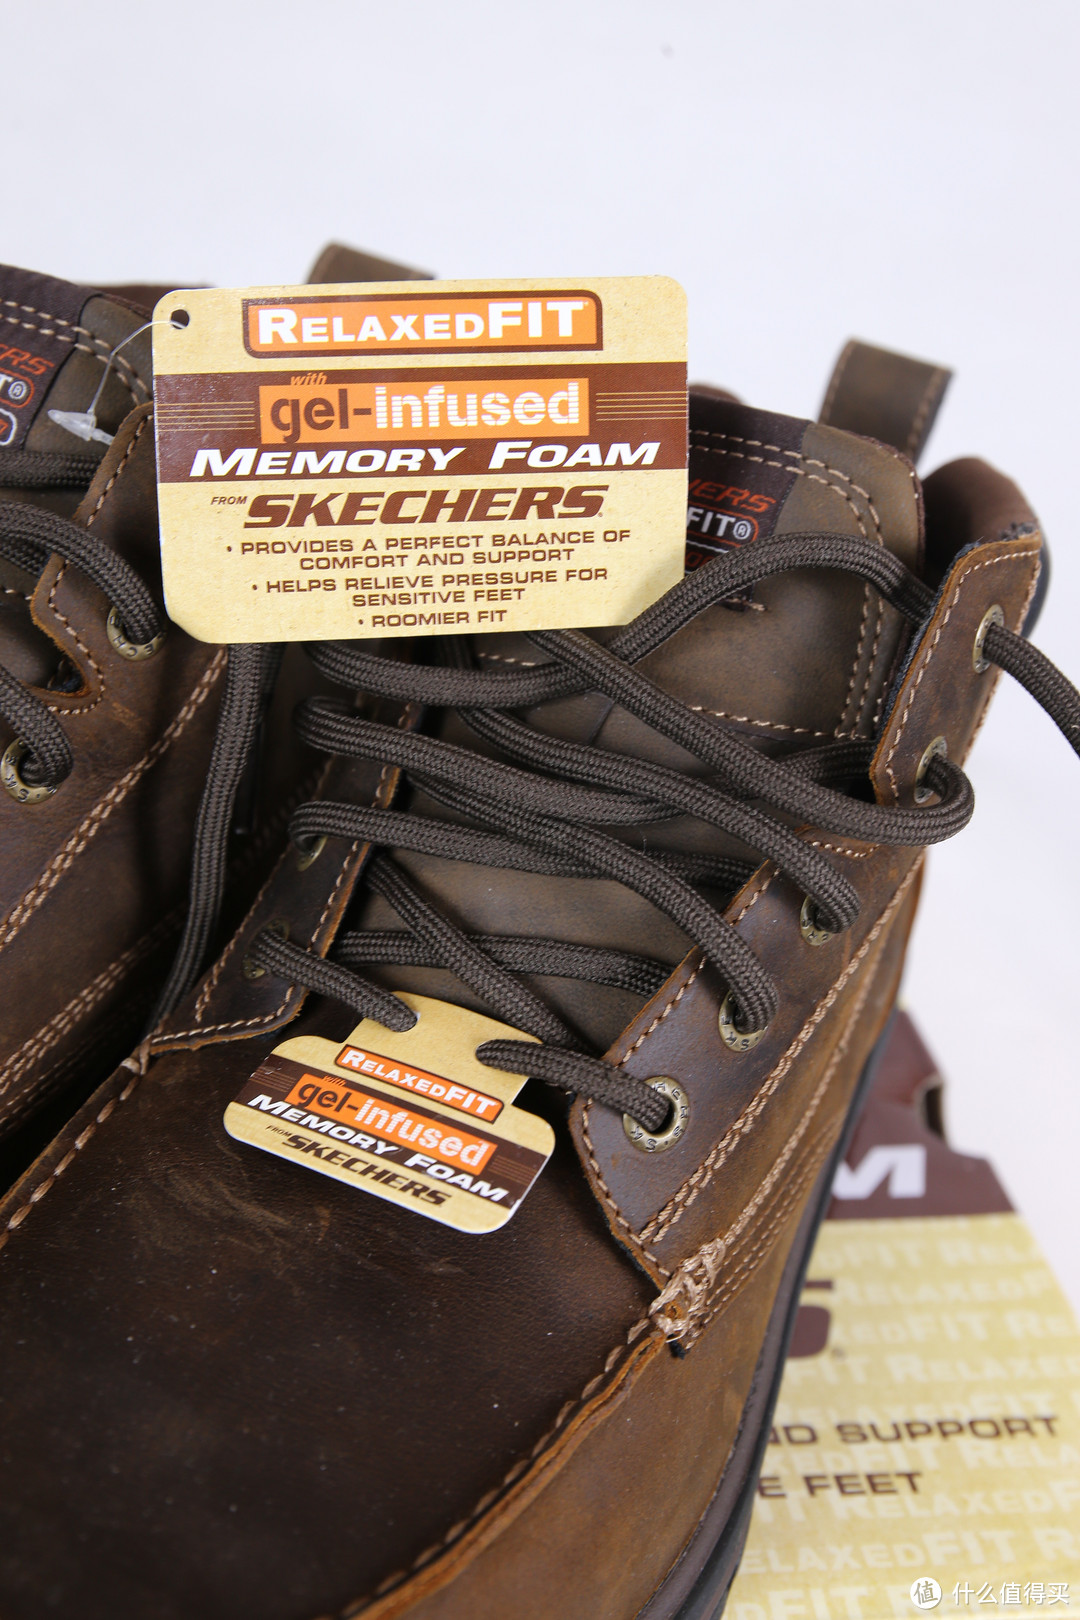 海外购奇遇记：Skechers 斯凯奇 USA系列 Segment-Barillo 男靴 开箱及维权